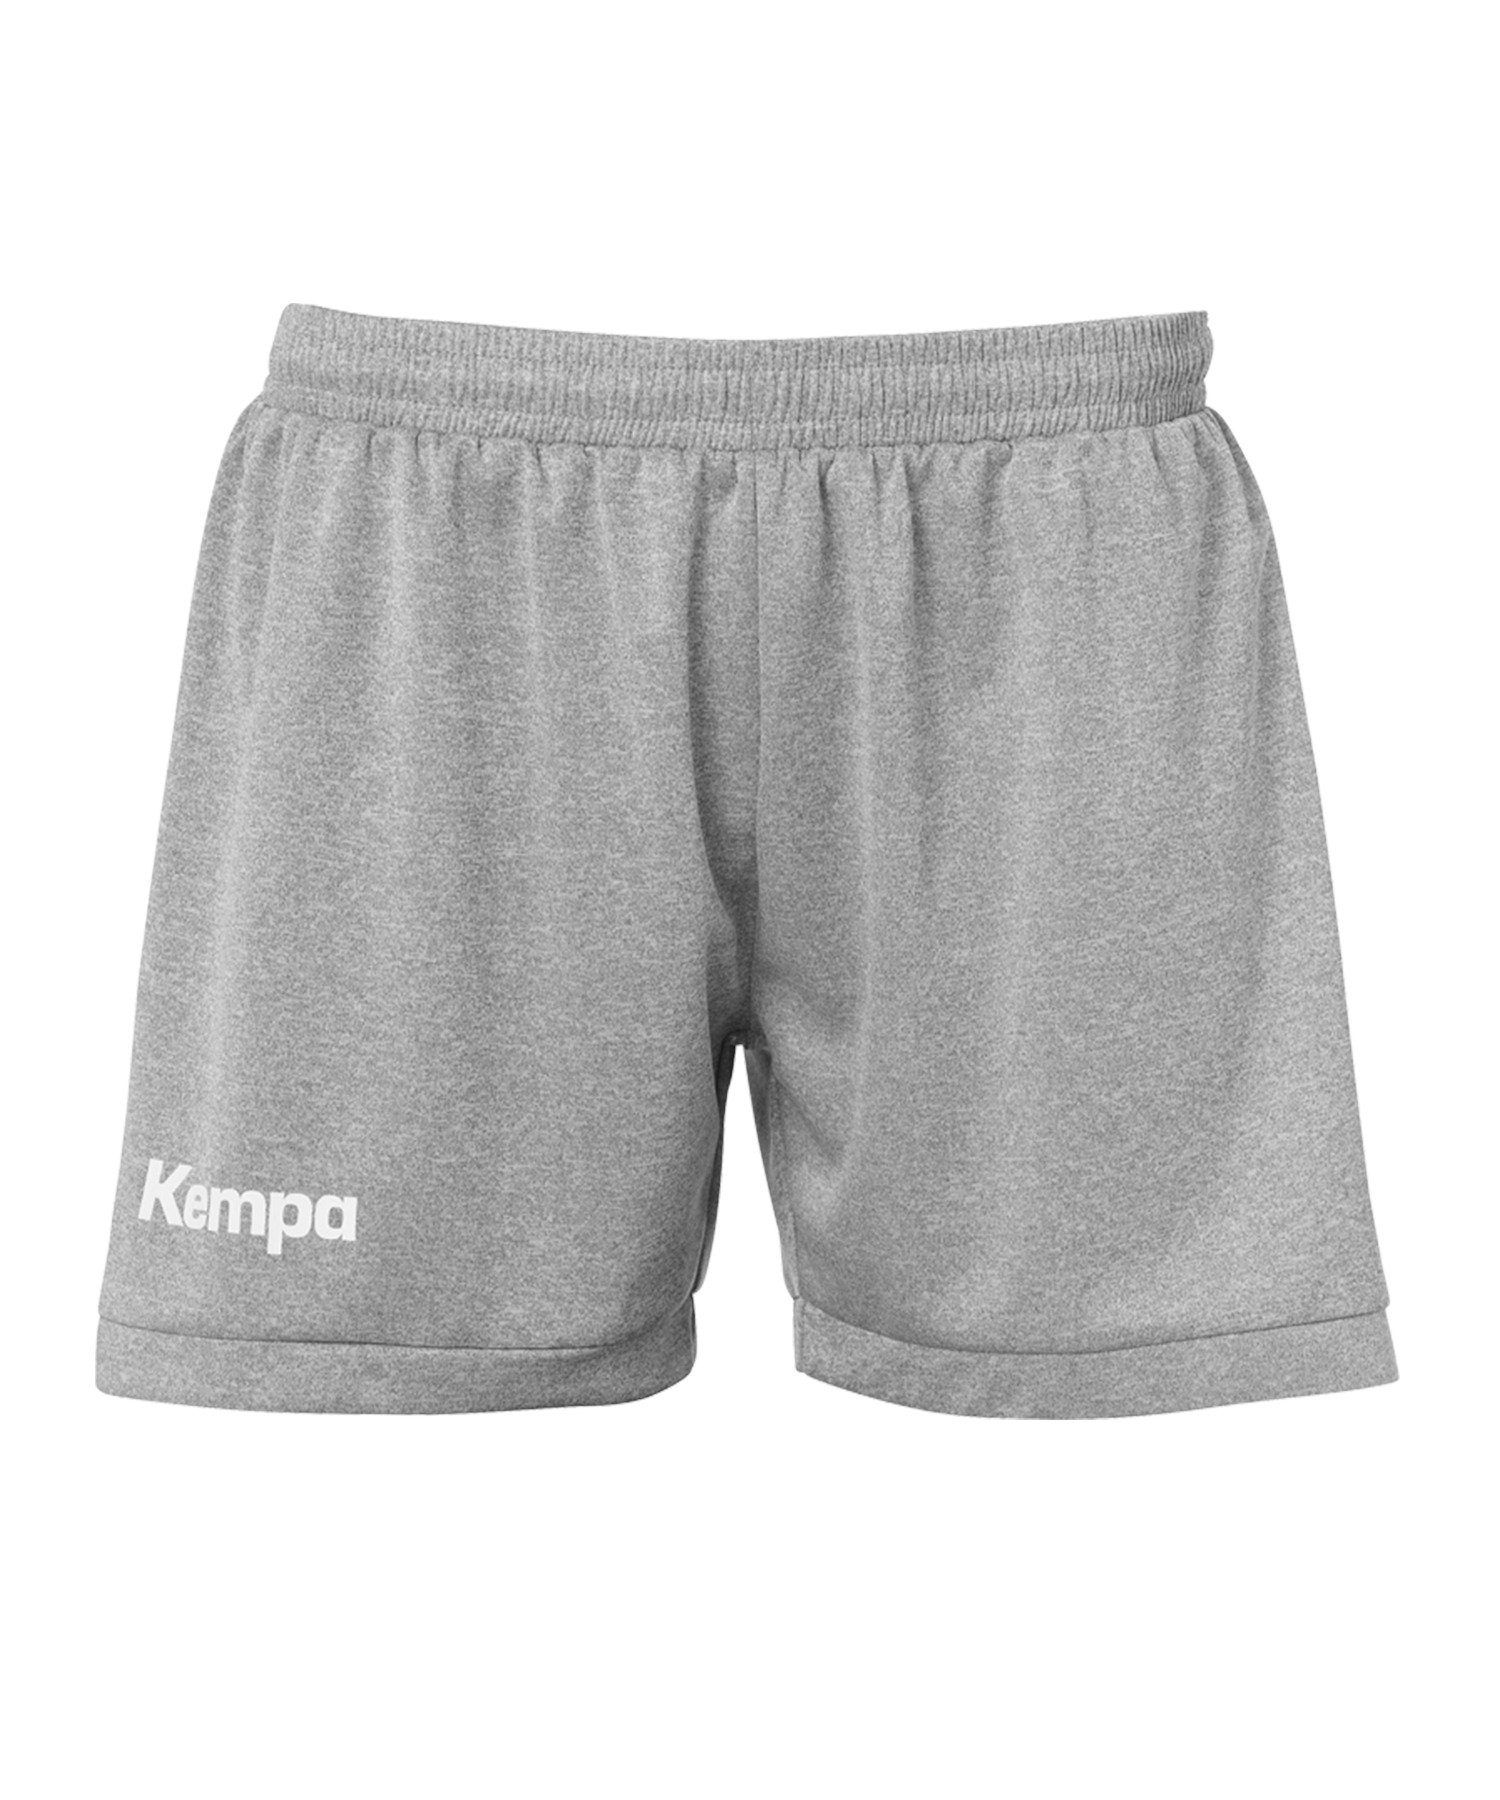 Kempa Sporthose Core 2.0 Short ohne Innenslip Damen